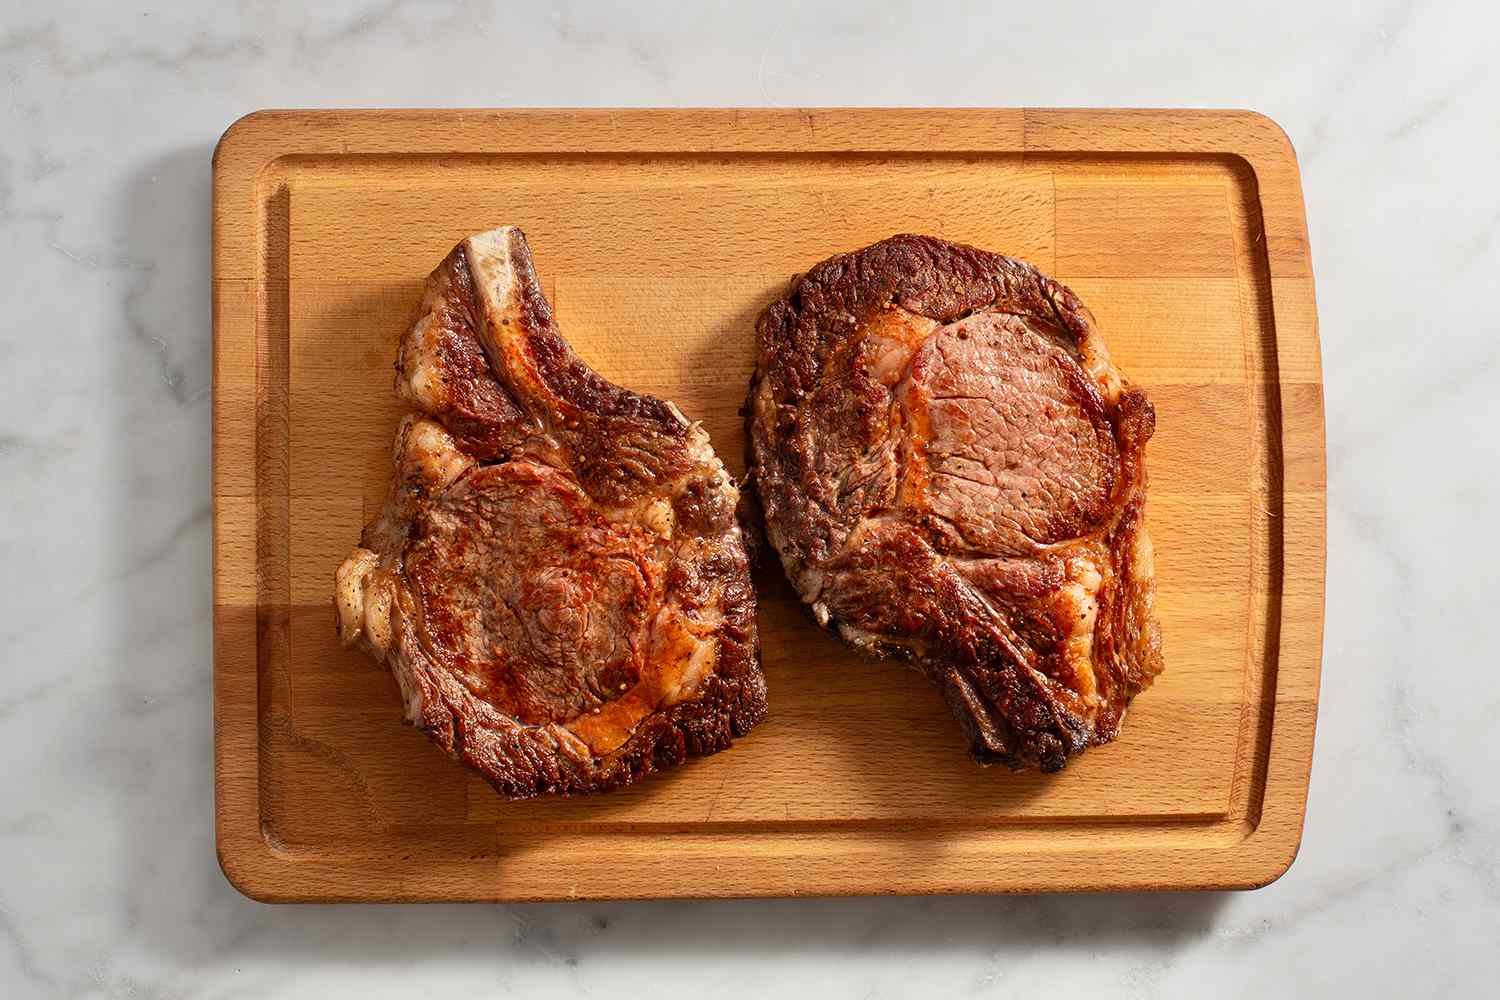 seared steaks resting on wood cutting board